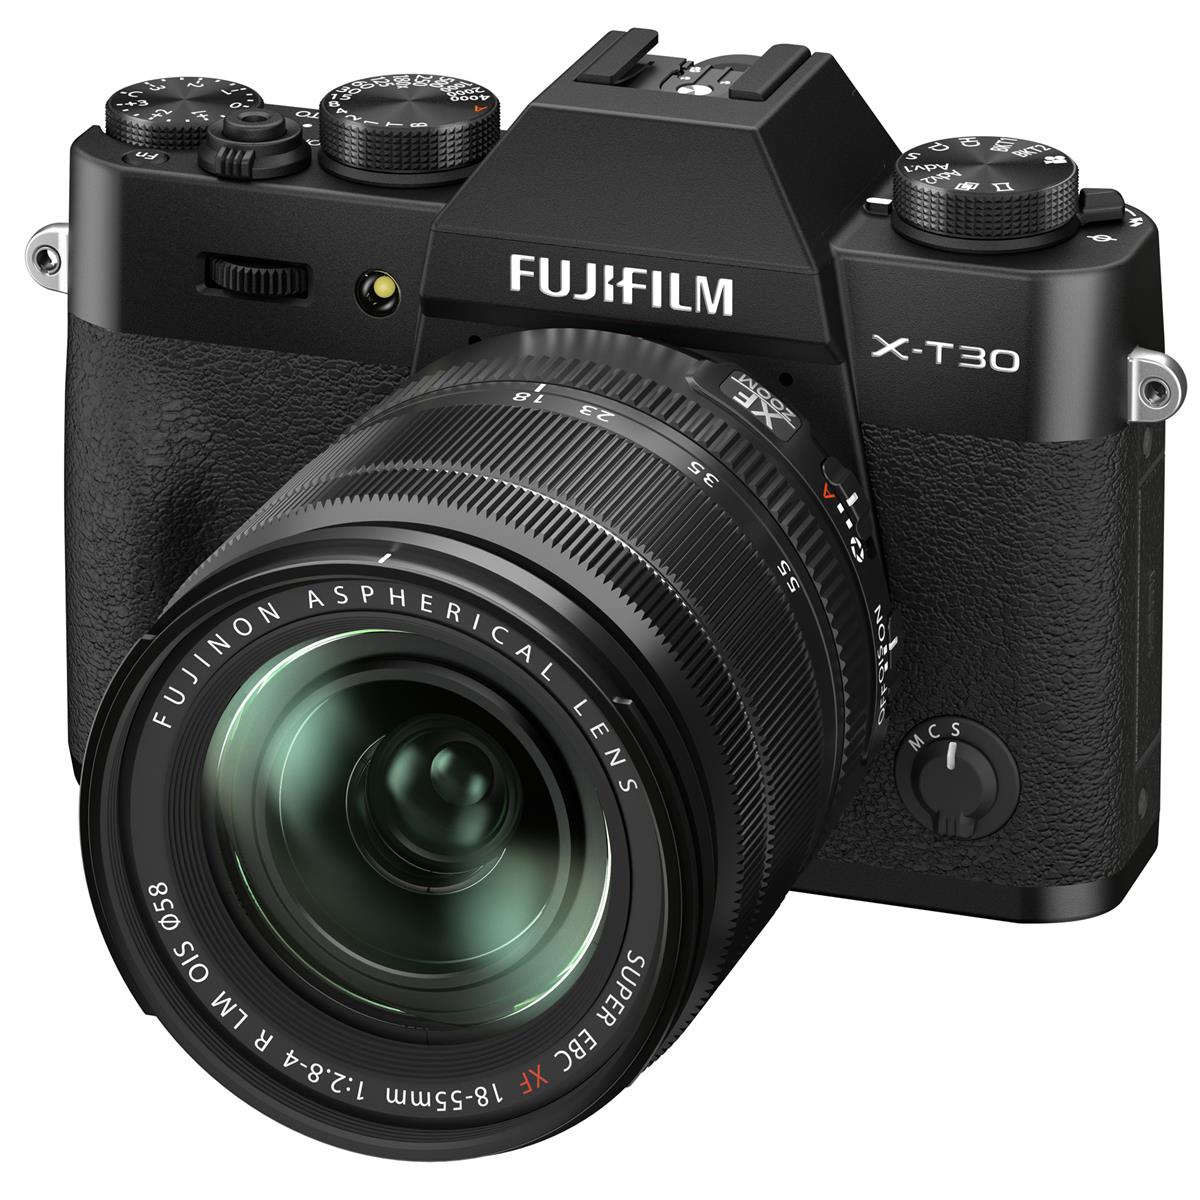 Image of Fujifilm X-T30 II Mirrorless Camera with XF 18-55mm f/2.8 Lens